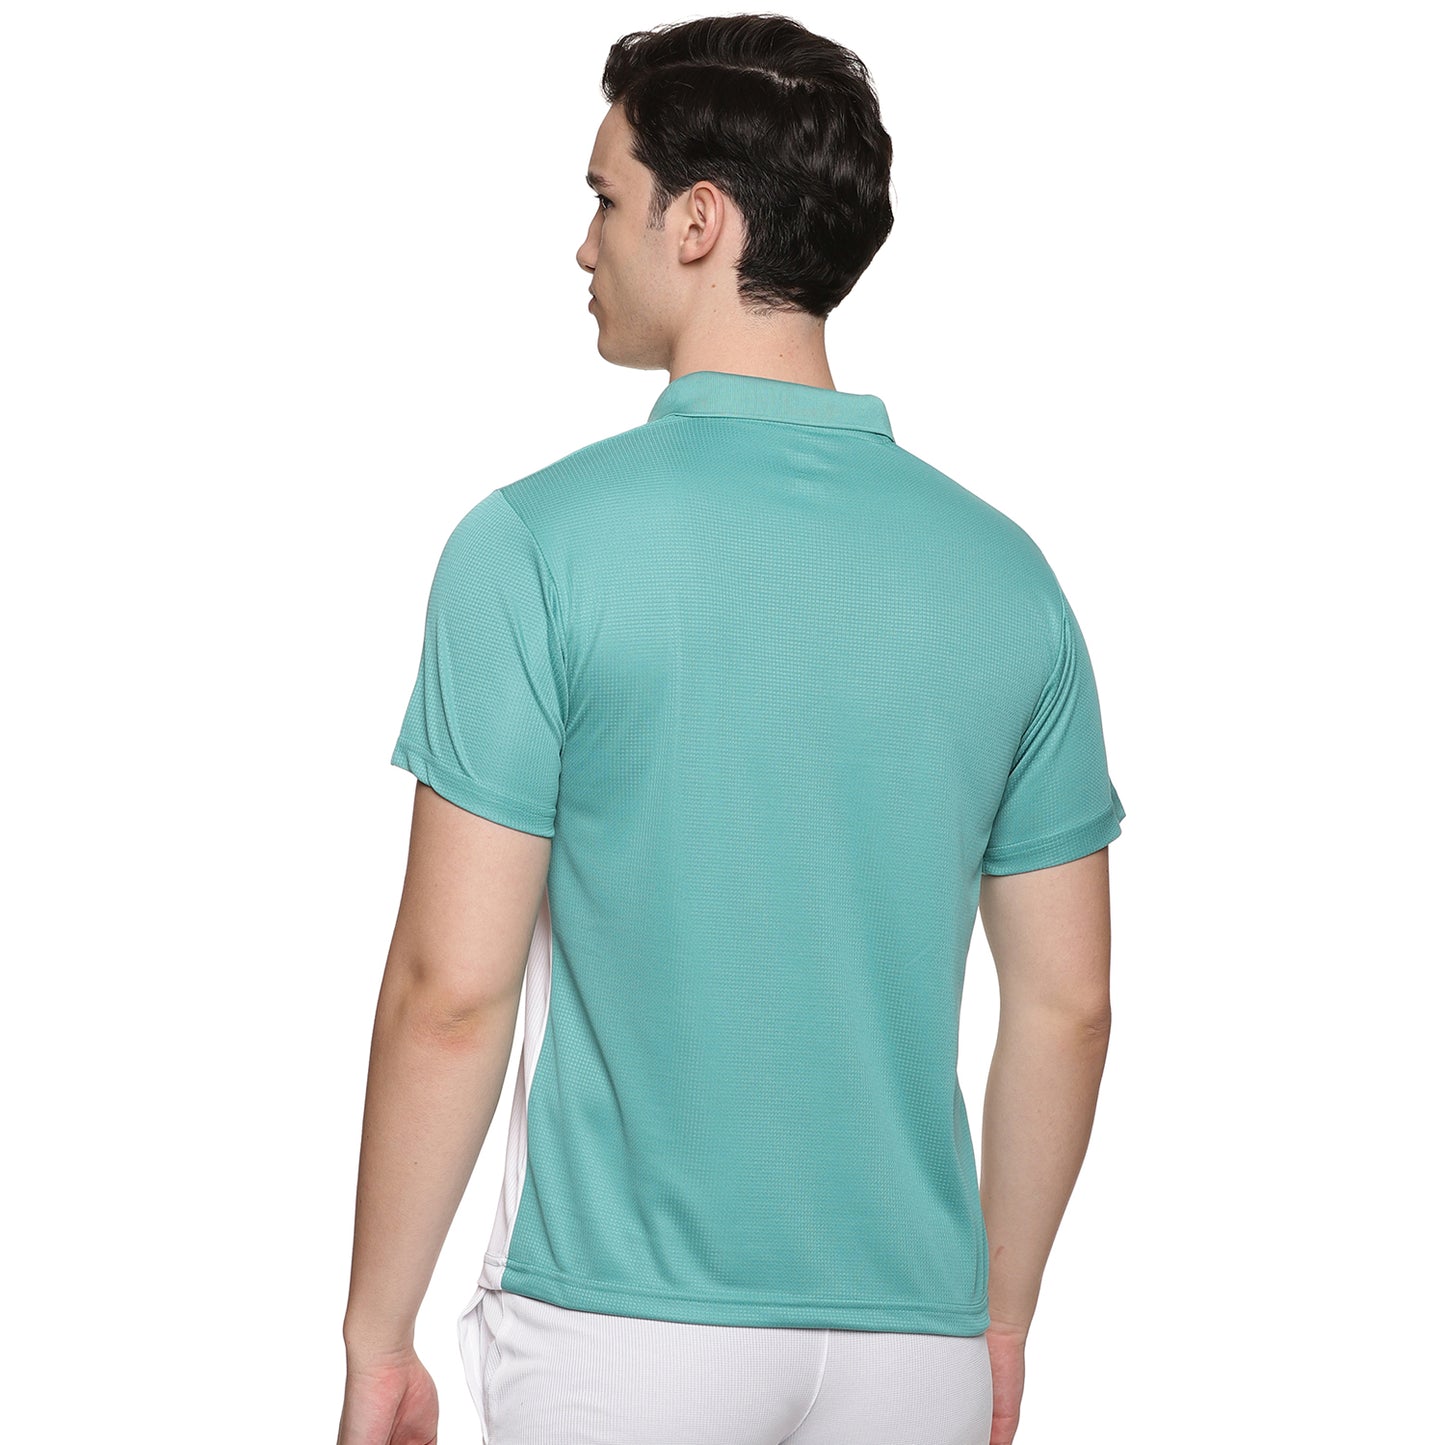 Prokick Sublimation Polo Neck Half Sleeves Badminton T-Shirt - Best Price online Prokicksports.com